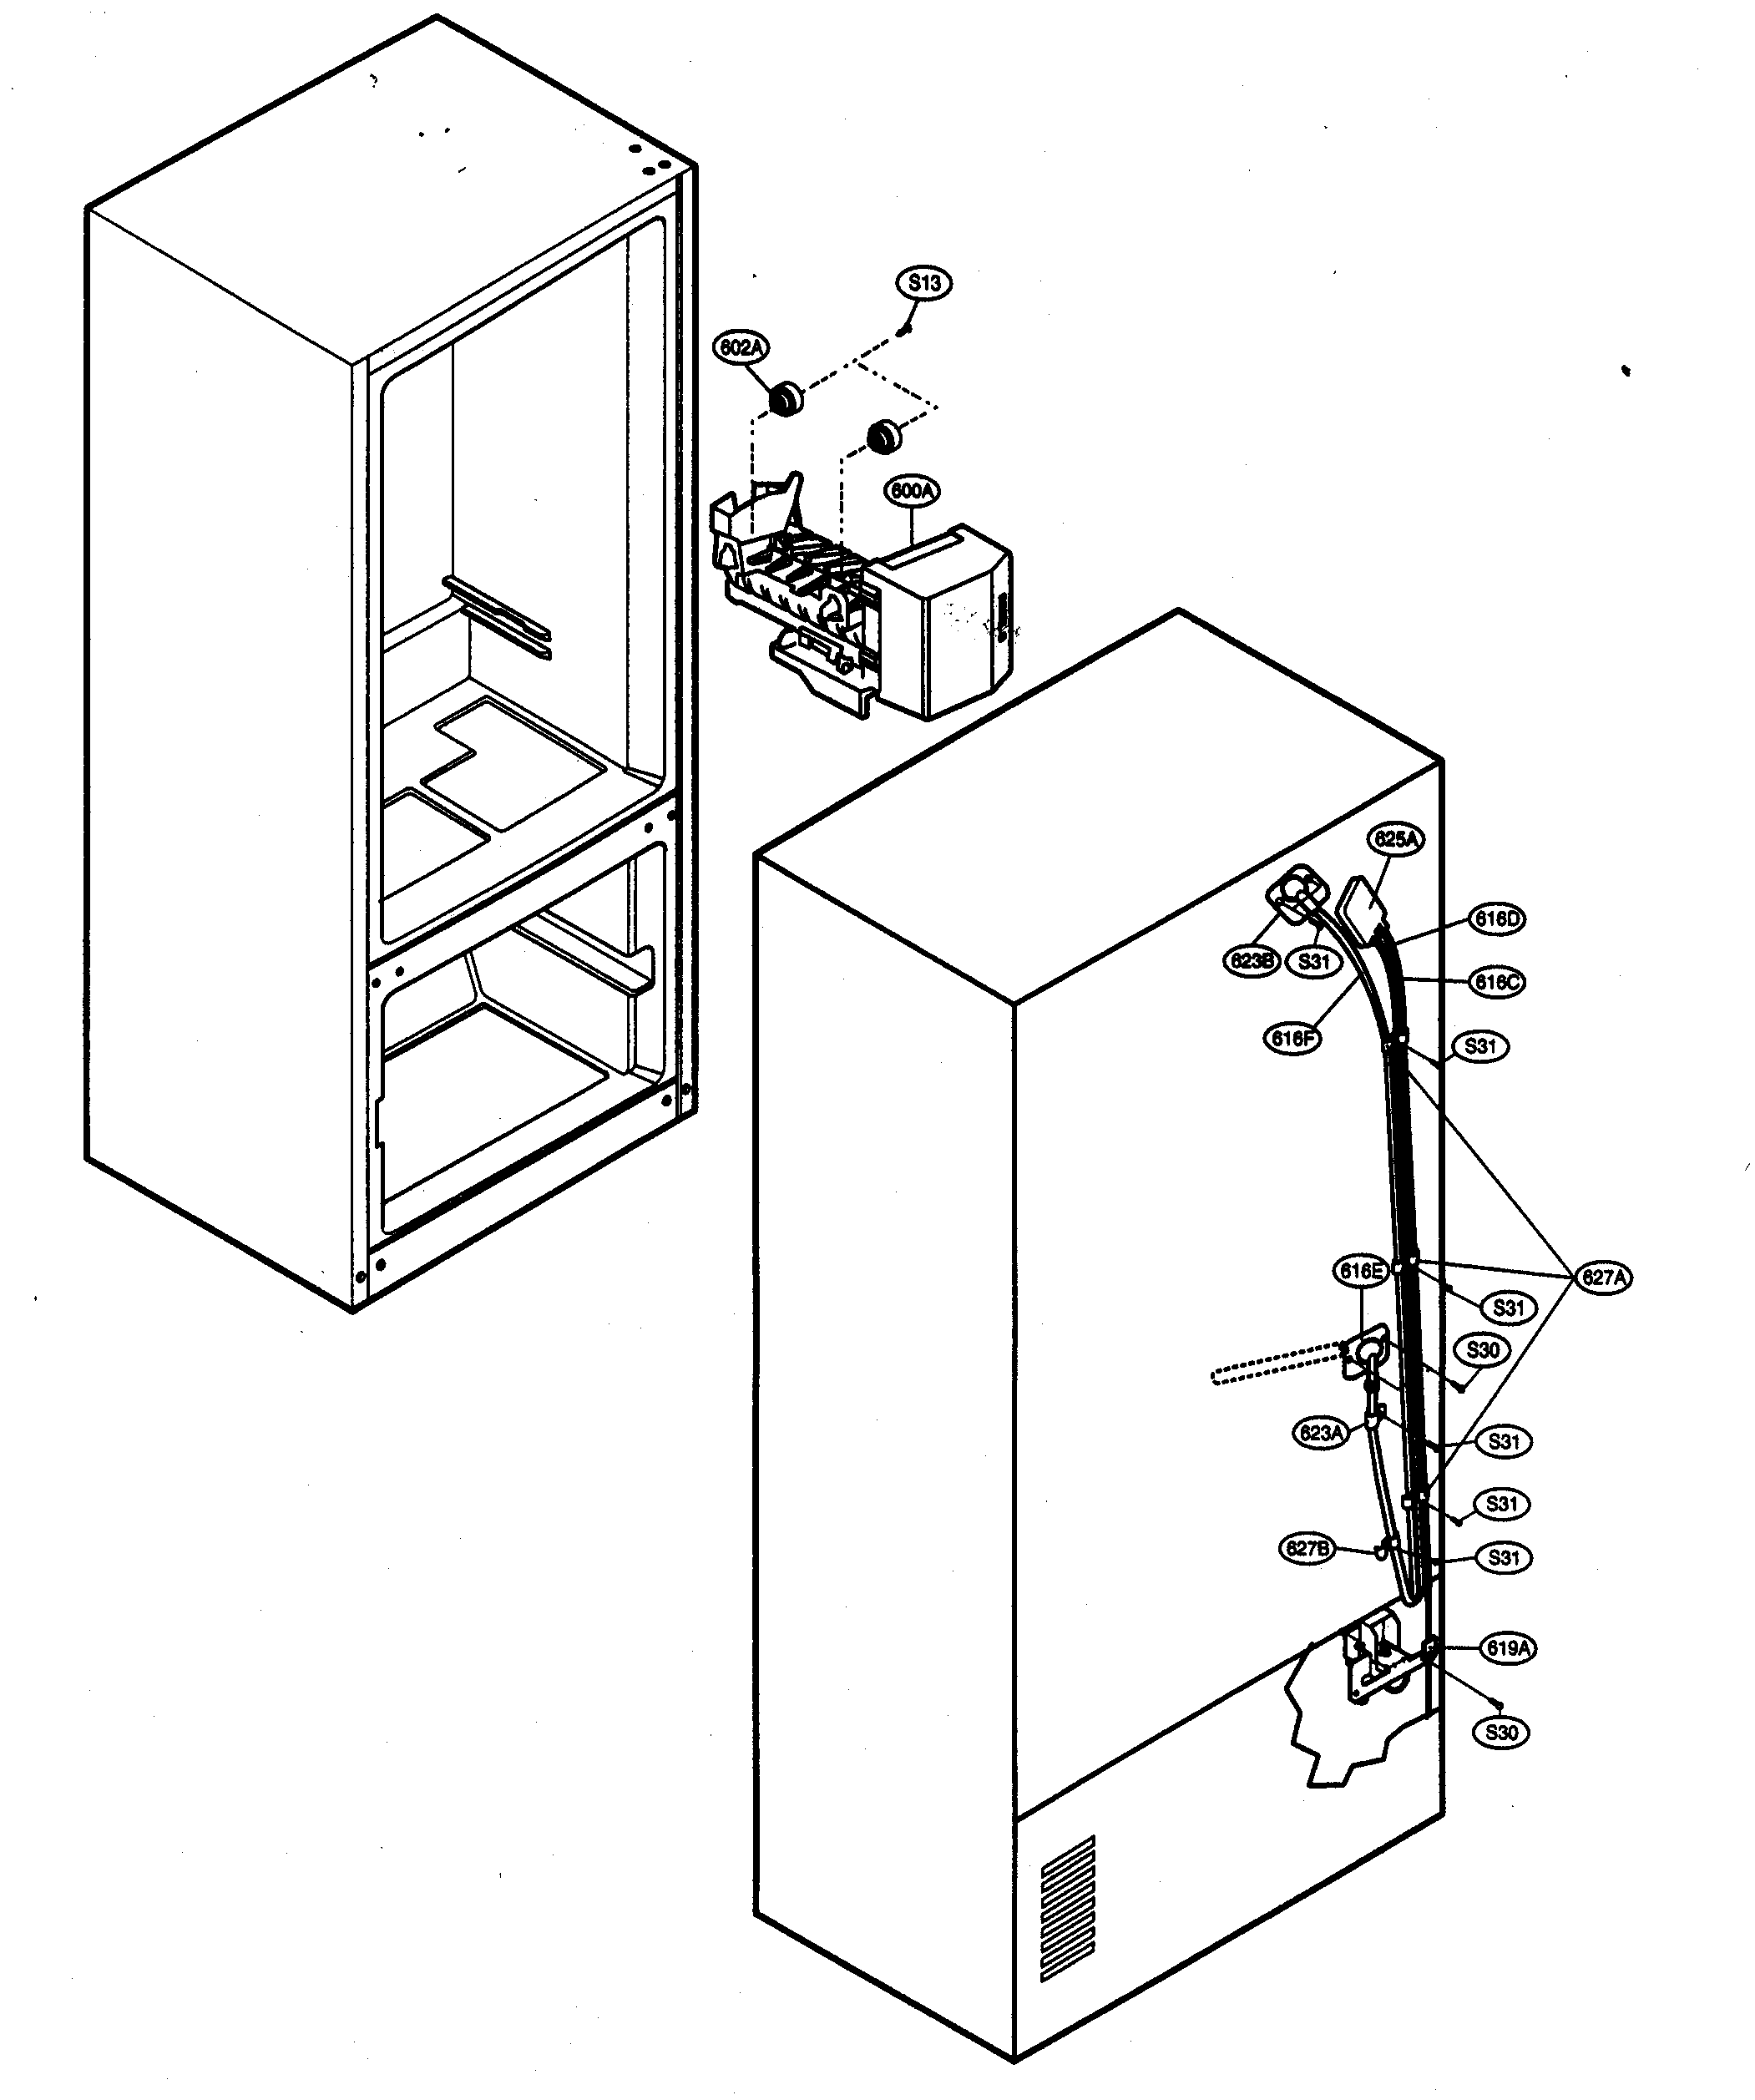 [DIAGRAM] Lg Refrigerator Ice Maker Diagram - MYDIAGRAM.ONLINE